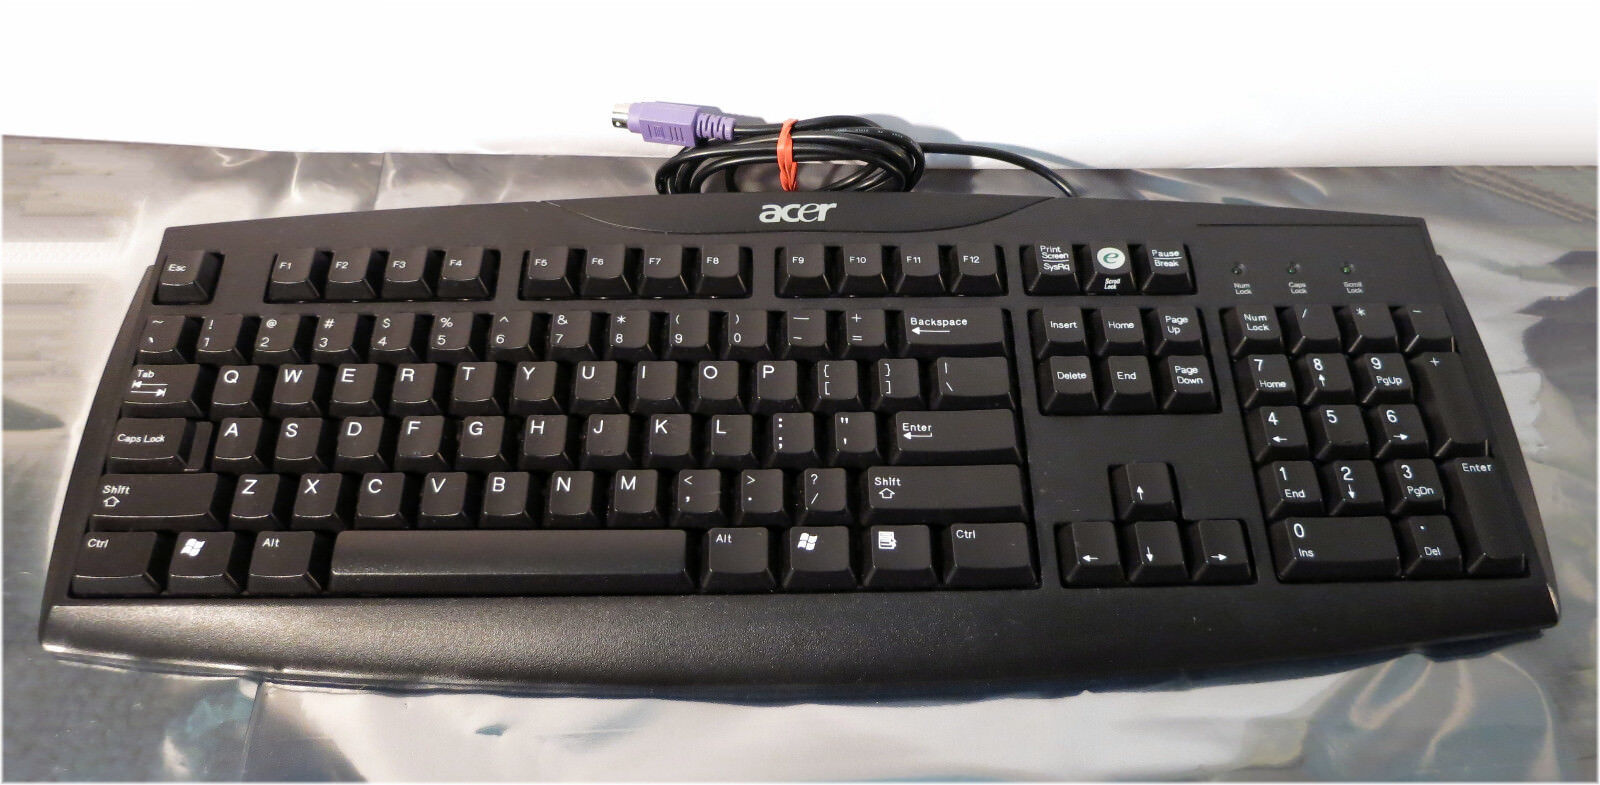 Primary image for ACER SK-1688 Standad PS/2 Keyboard - Black